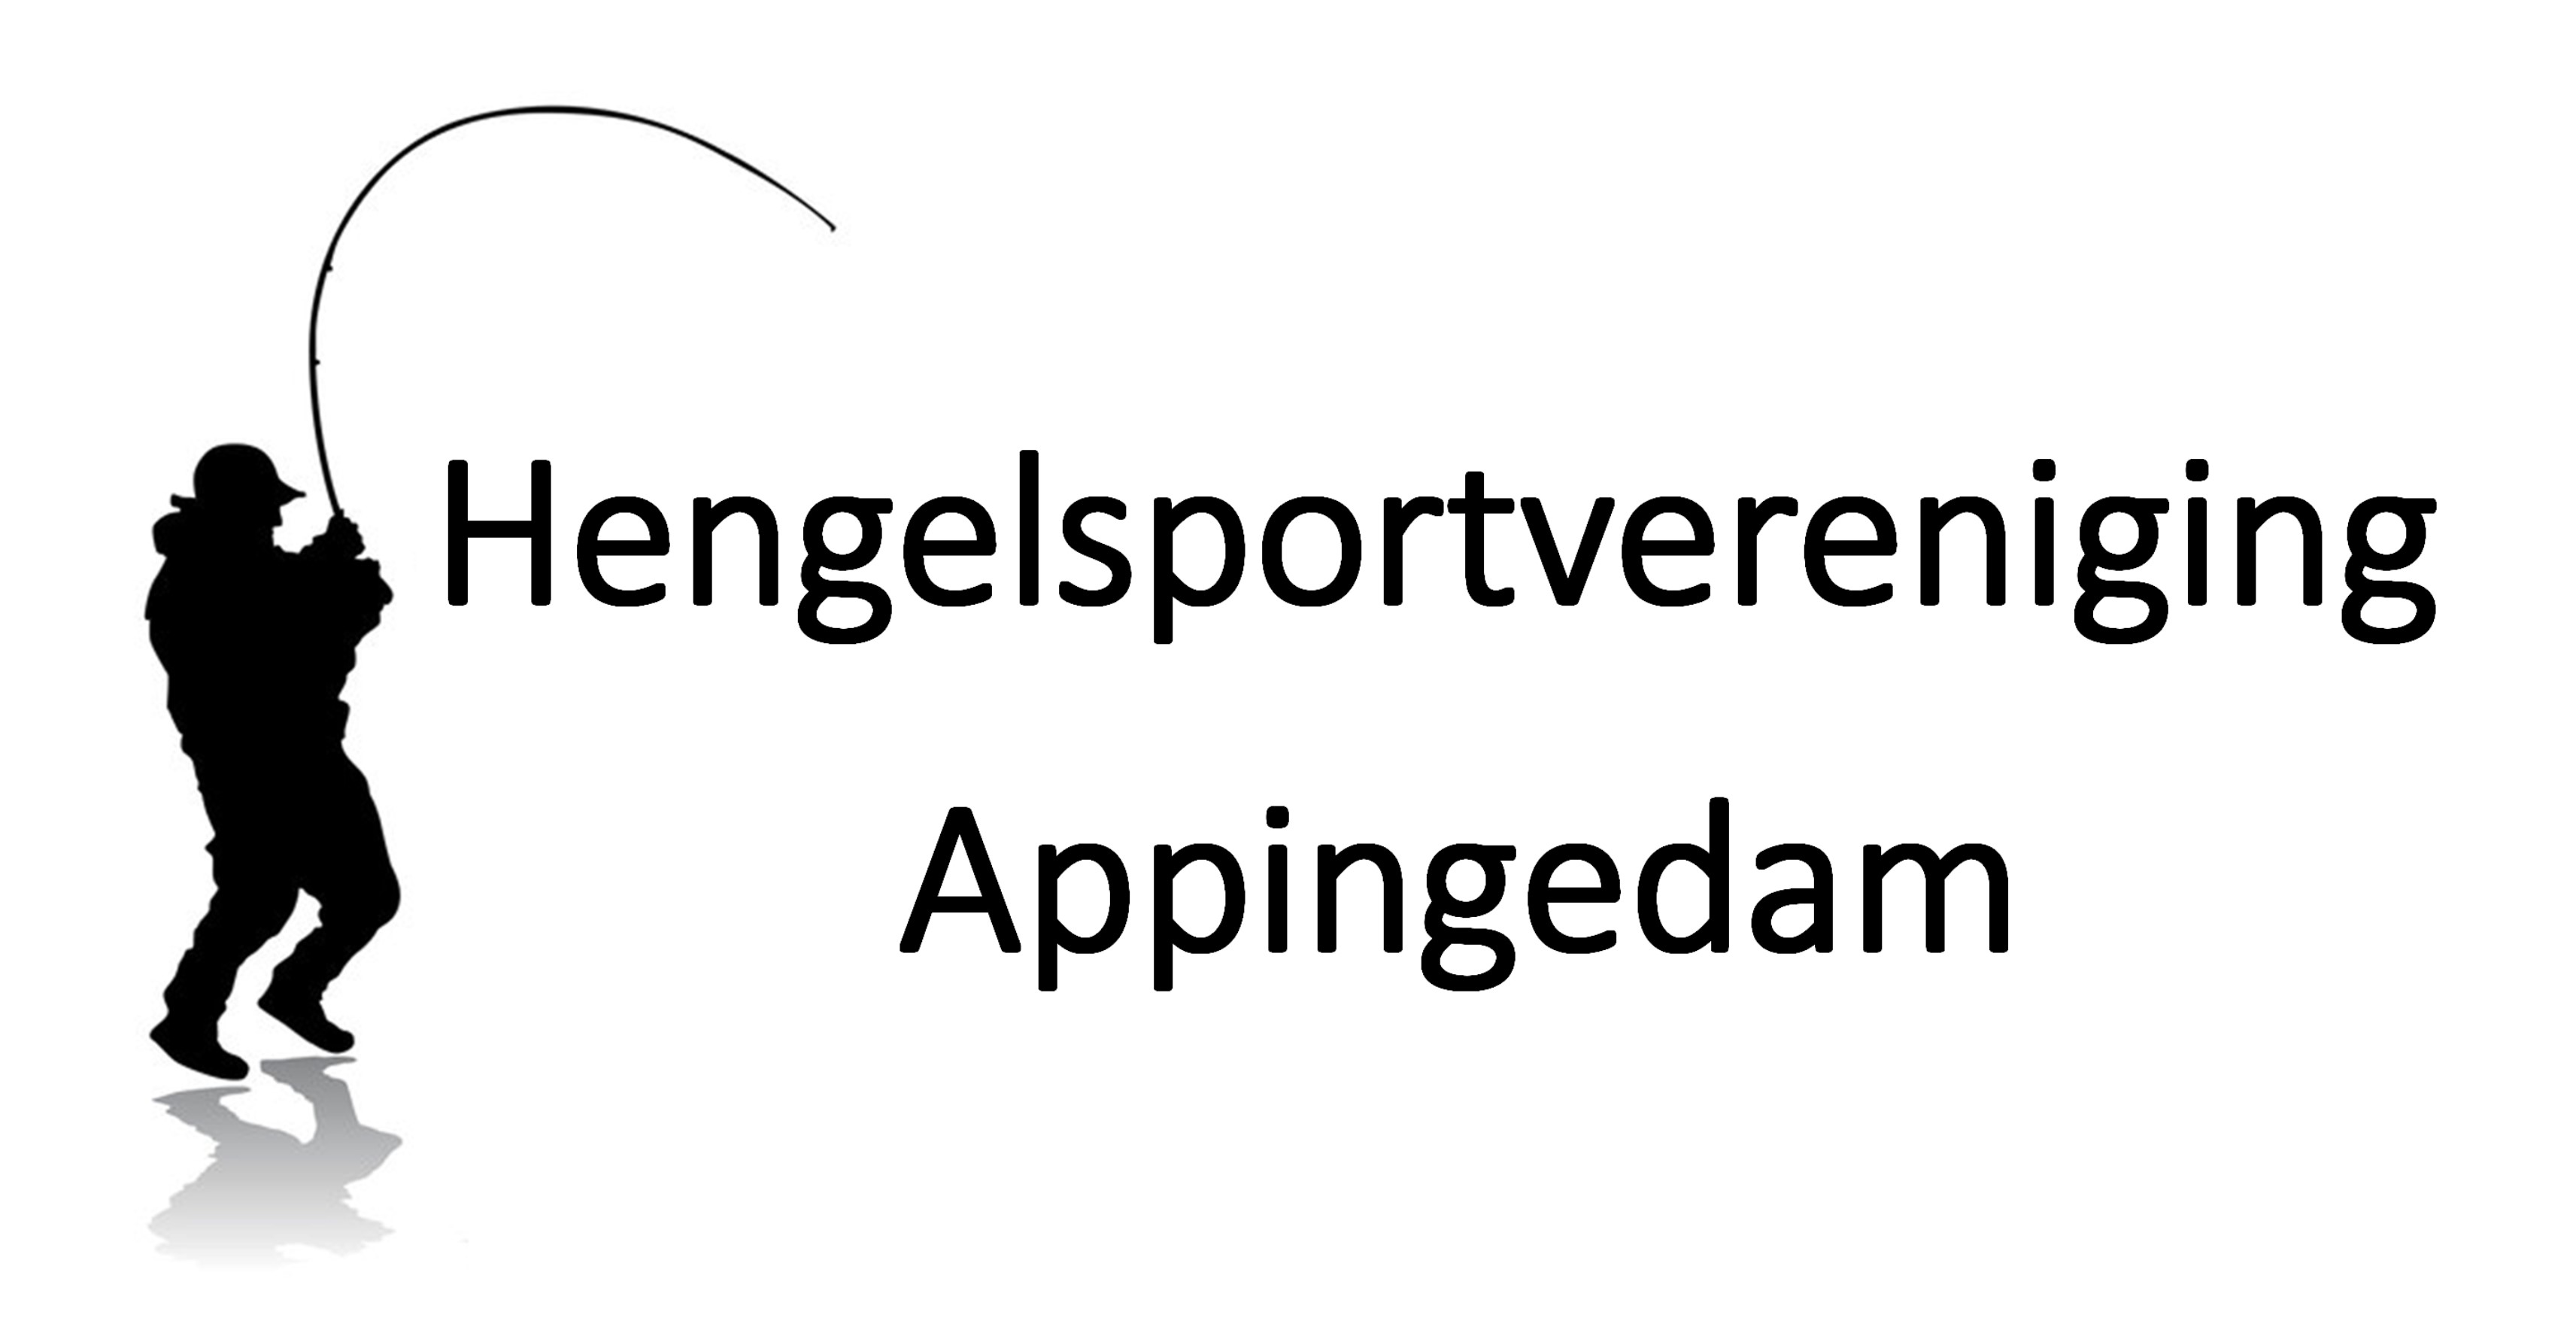 HSV Appingedam